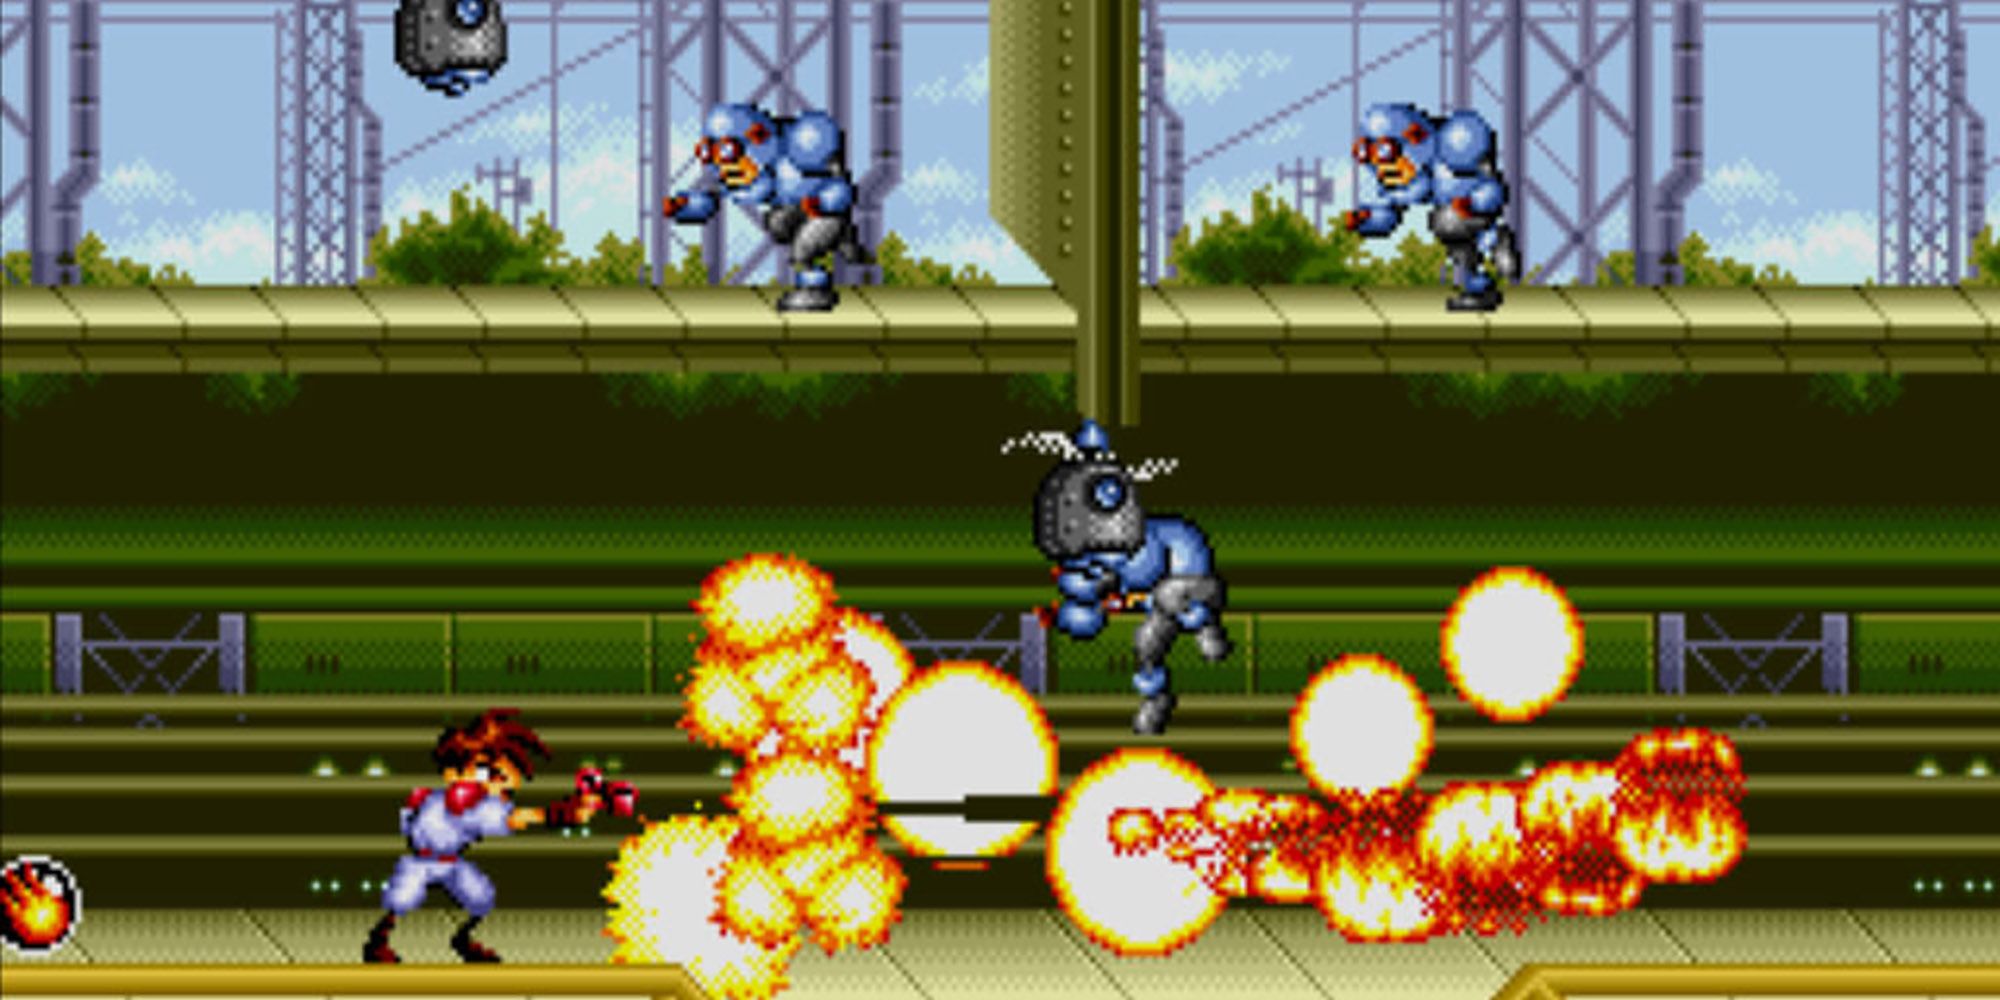 Gunstar Heroes also similar to Mega Man